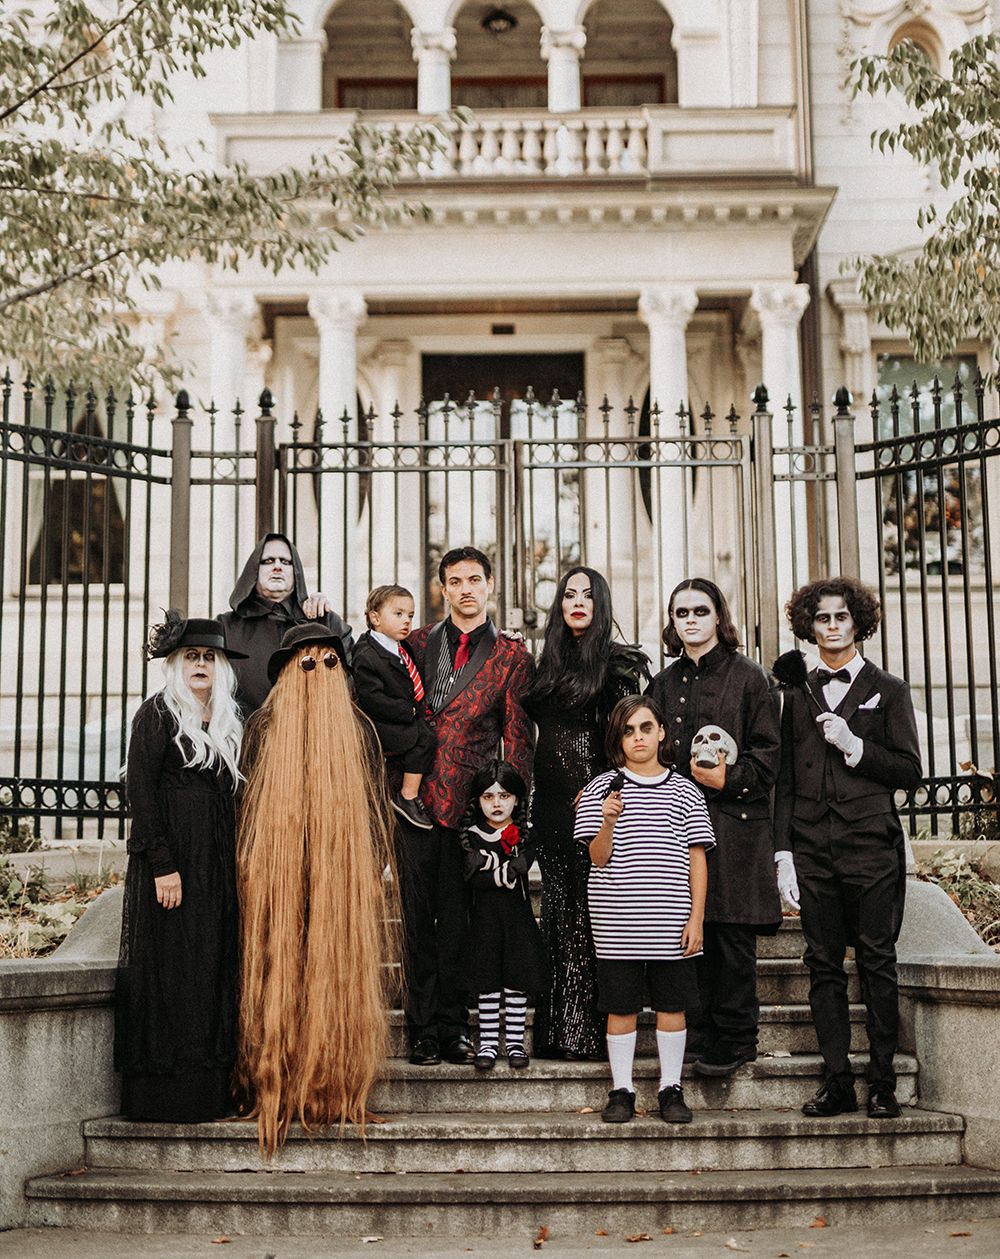 Addams family costume ideas